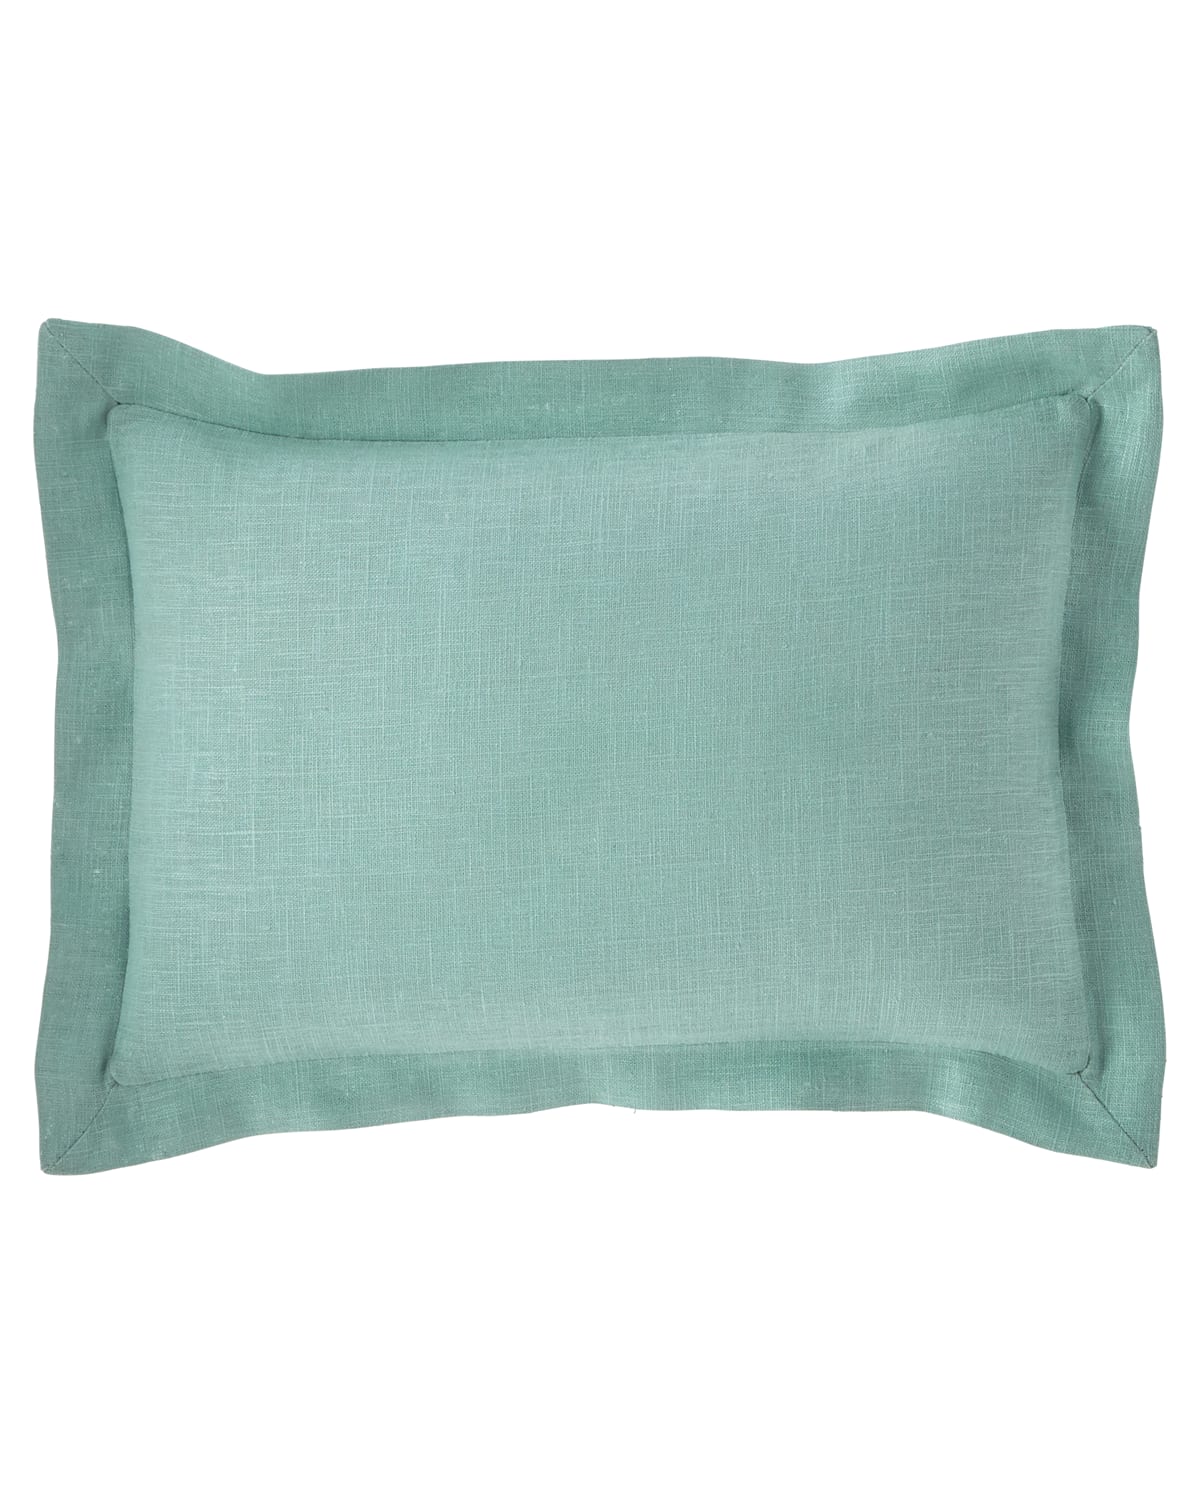 Image Sherry Kline Home Linen Pillow